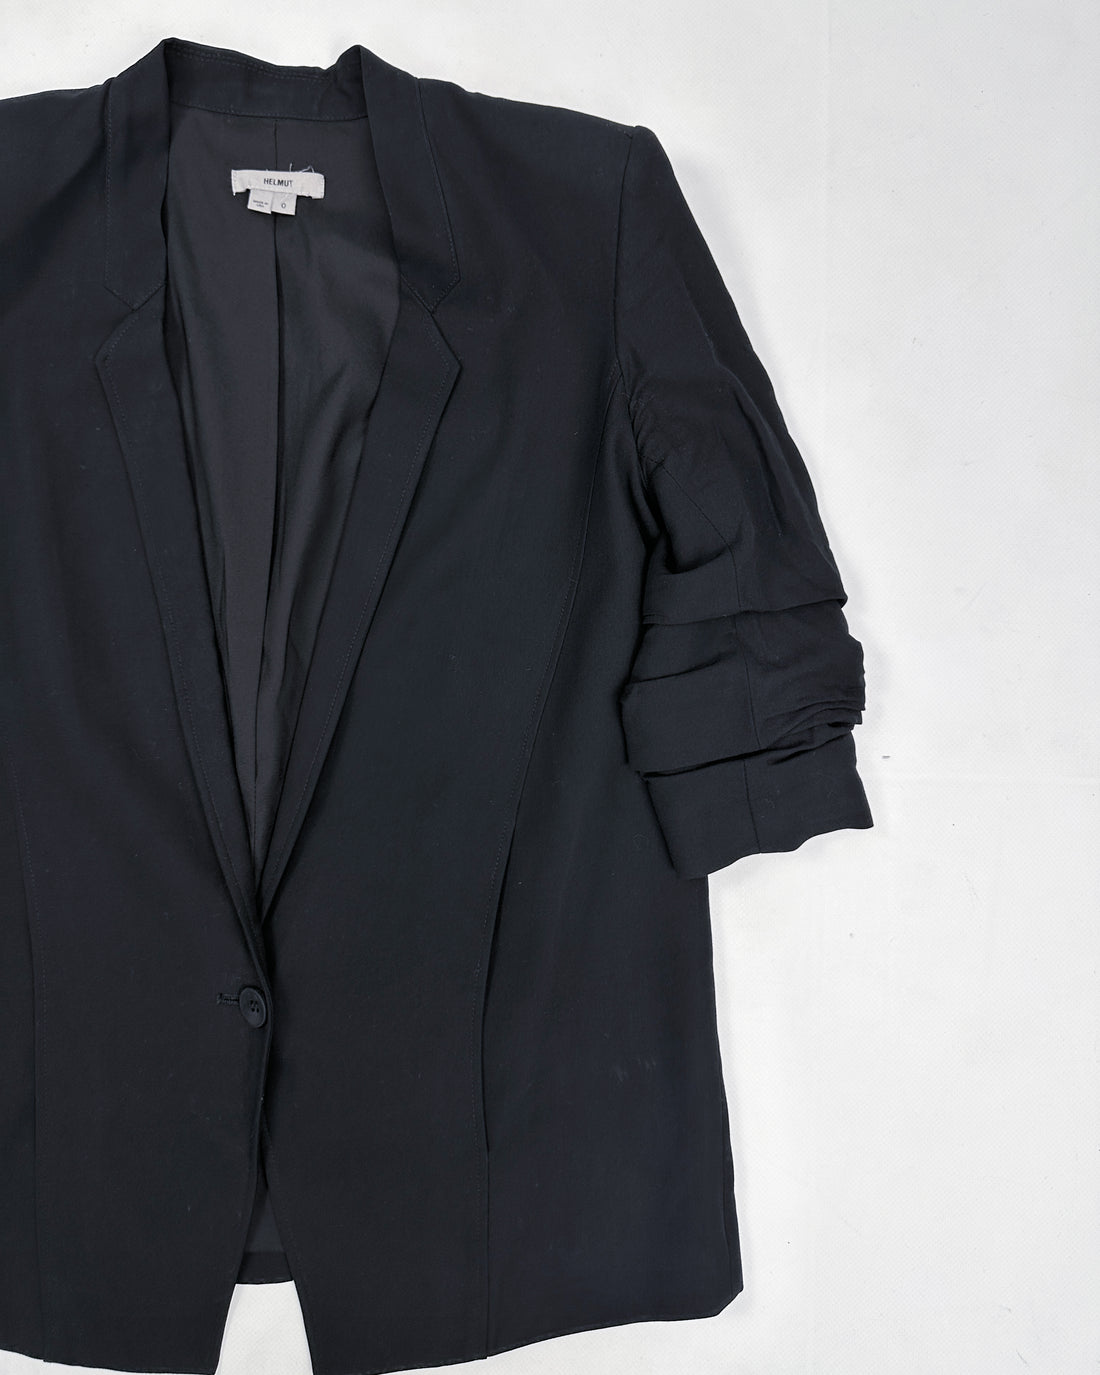 Helmut Lang Wrinkled Sleeves Black Blazer Made in USA 1990's